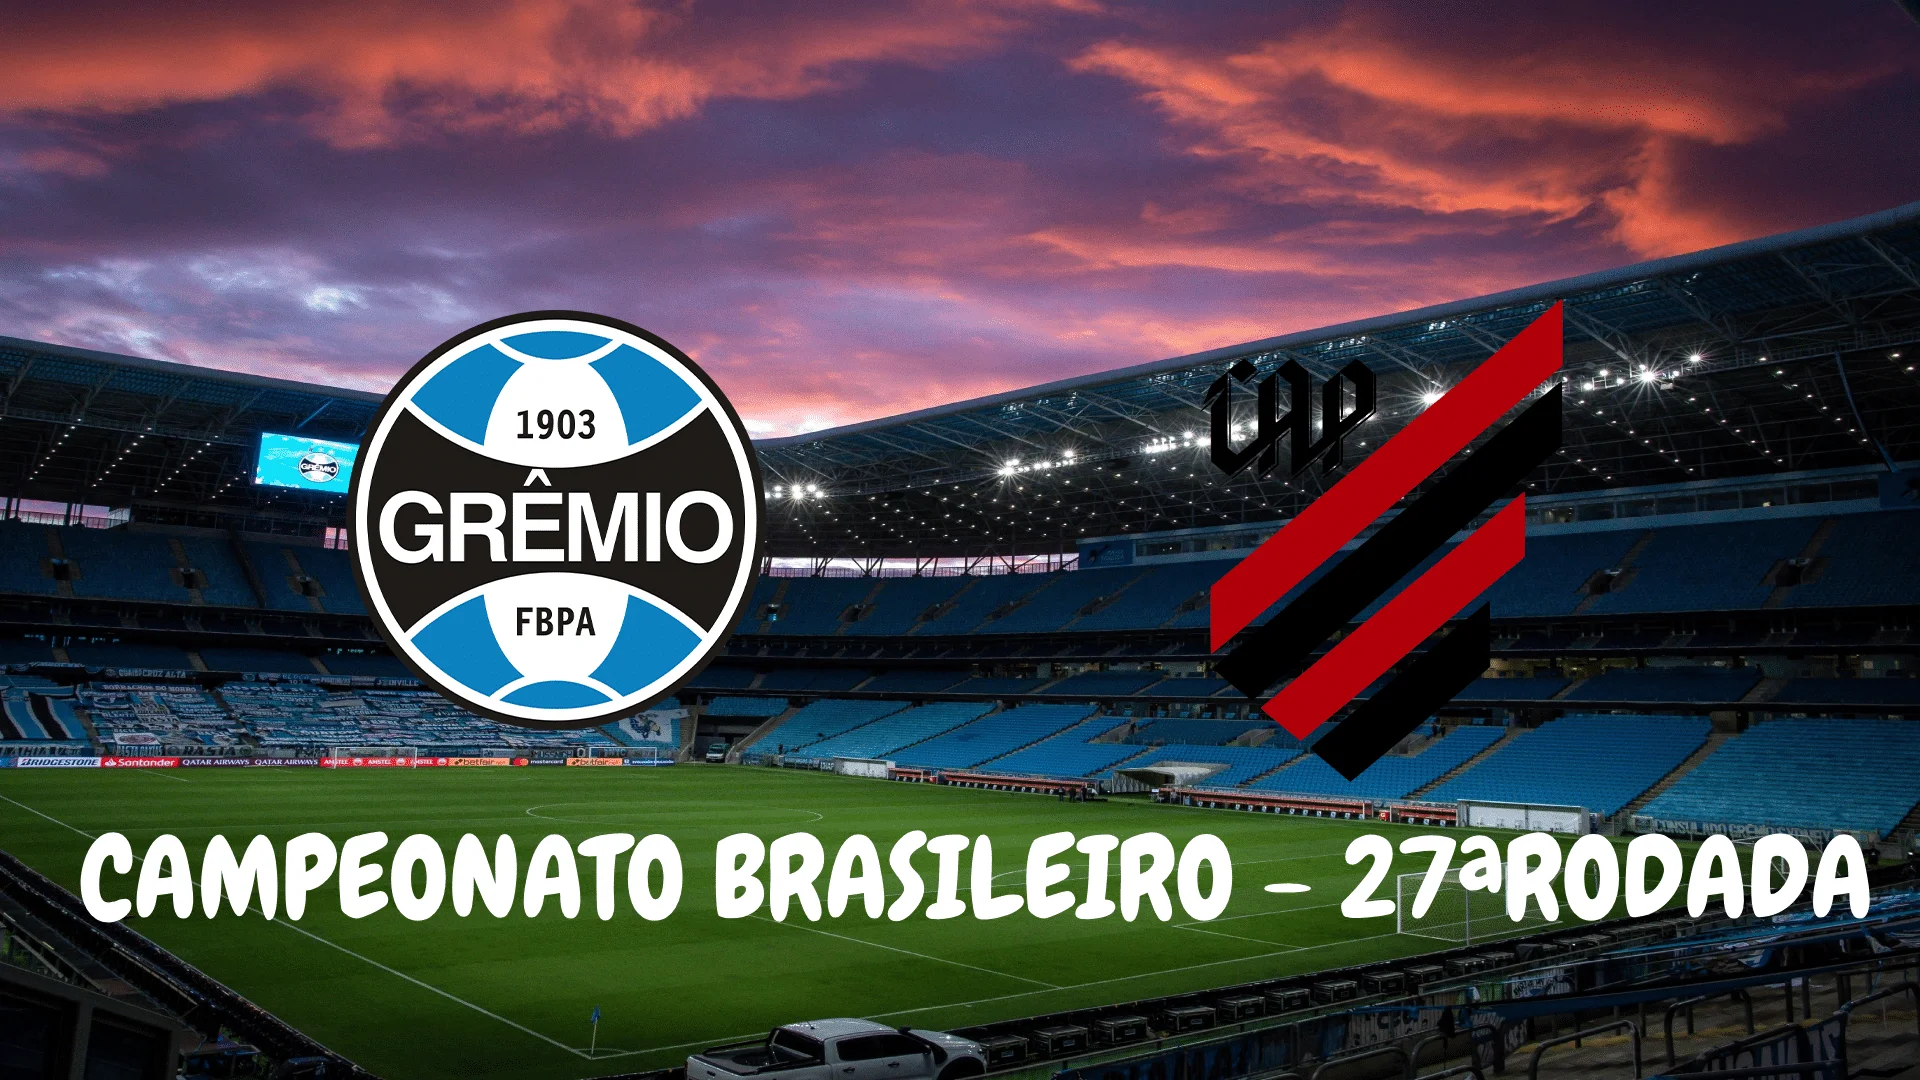 Grêmio vs Caxias: A Clash of Rivals on the Football Field